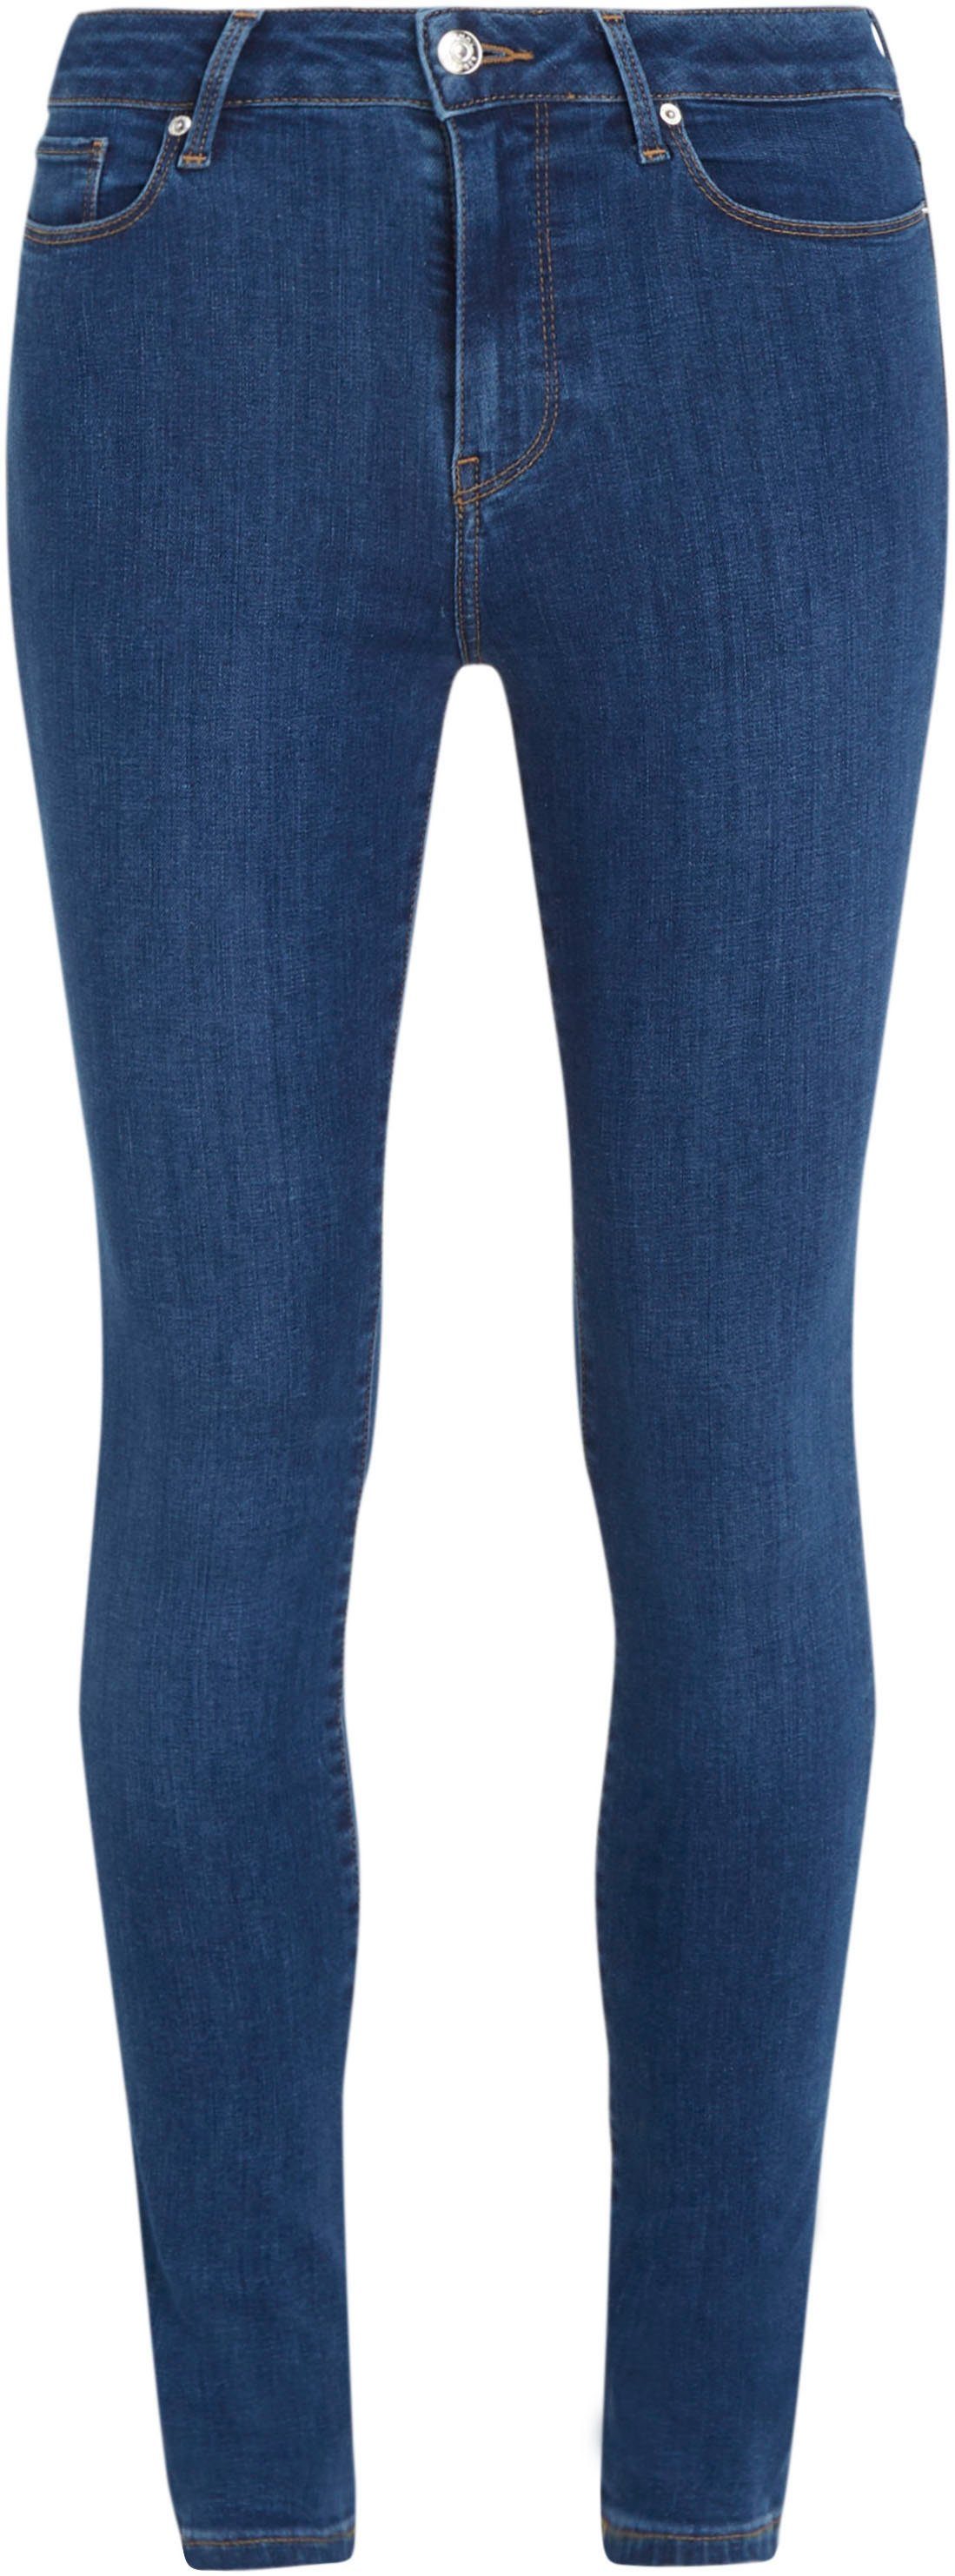 Tommy Hilfiger Skinny-fit-Jeans TH HW FLEX U Waschung HARLEM KAI mid blauer blue SKINNY in